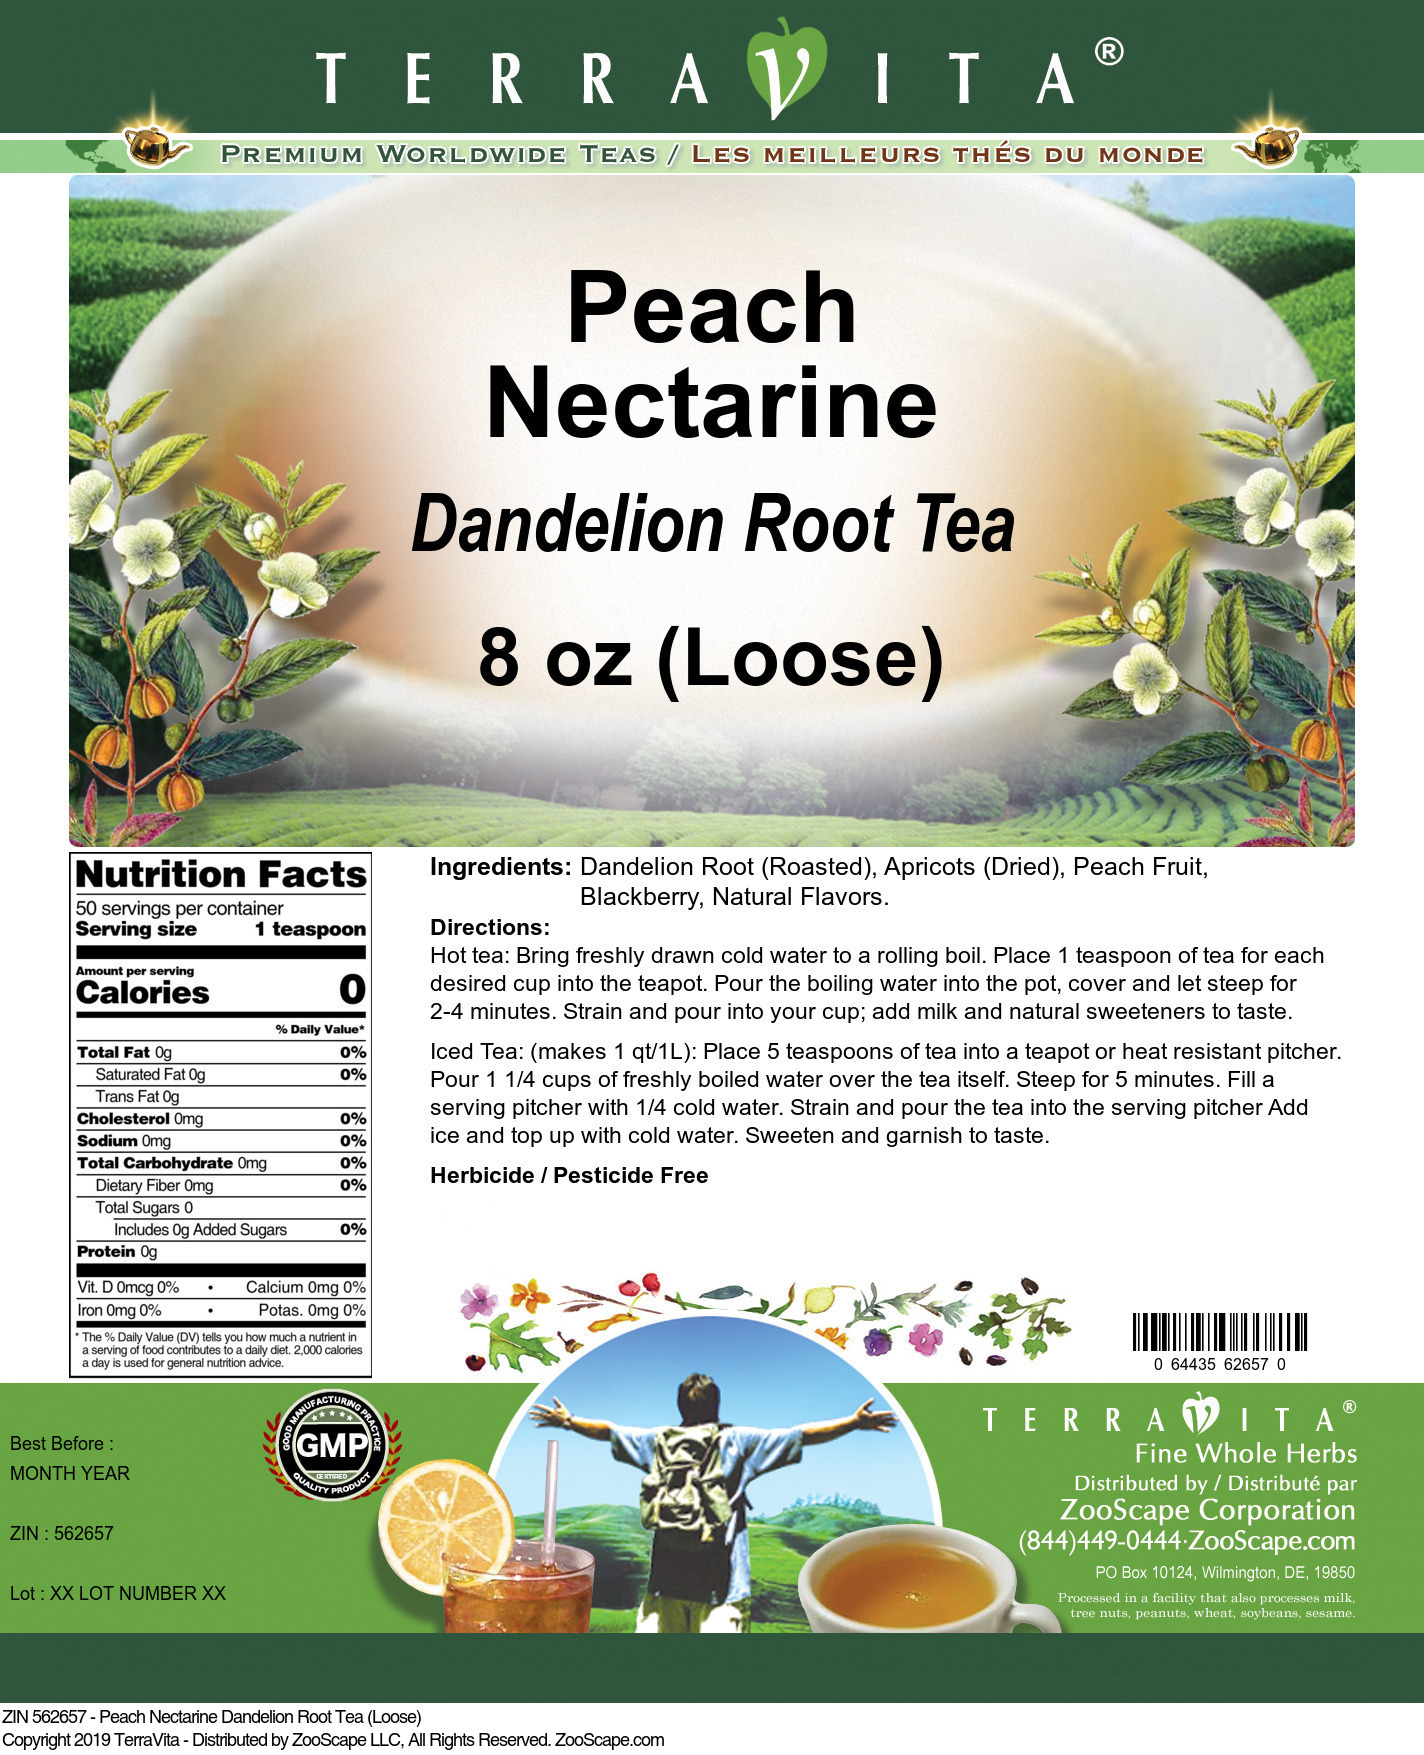 Peach Nectarine Dandelion Root Tea (Loose) - Label